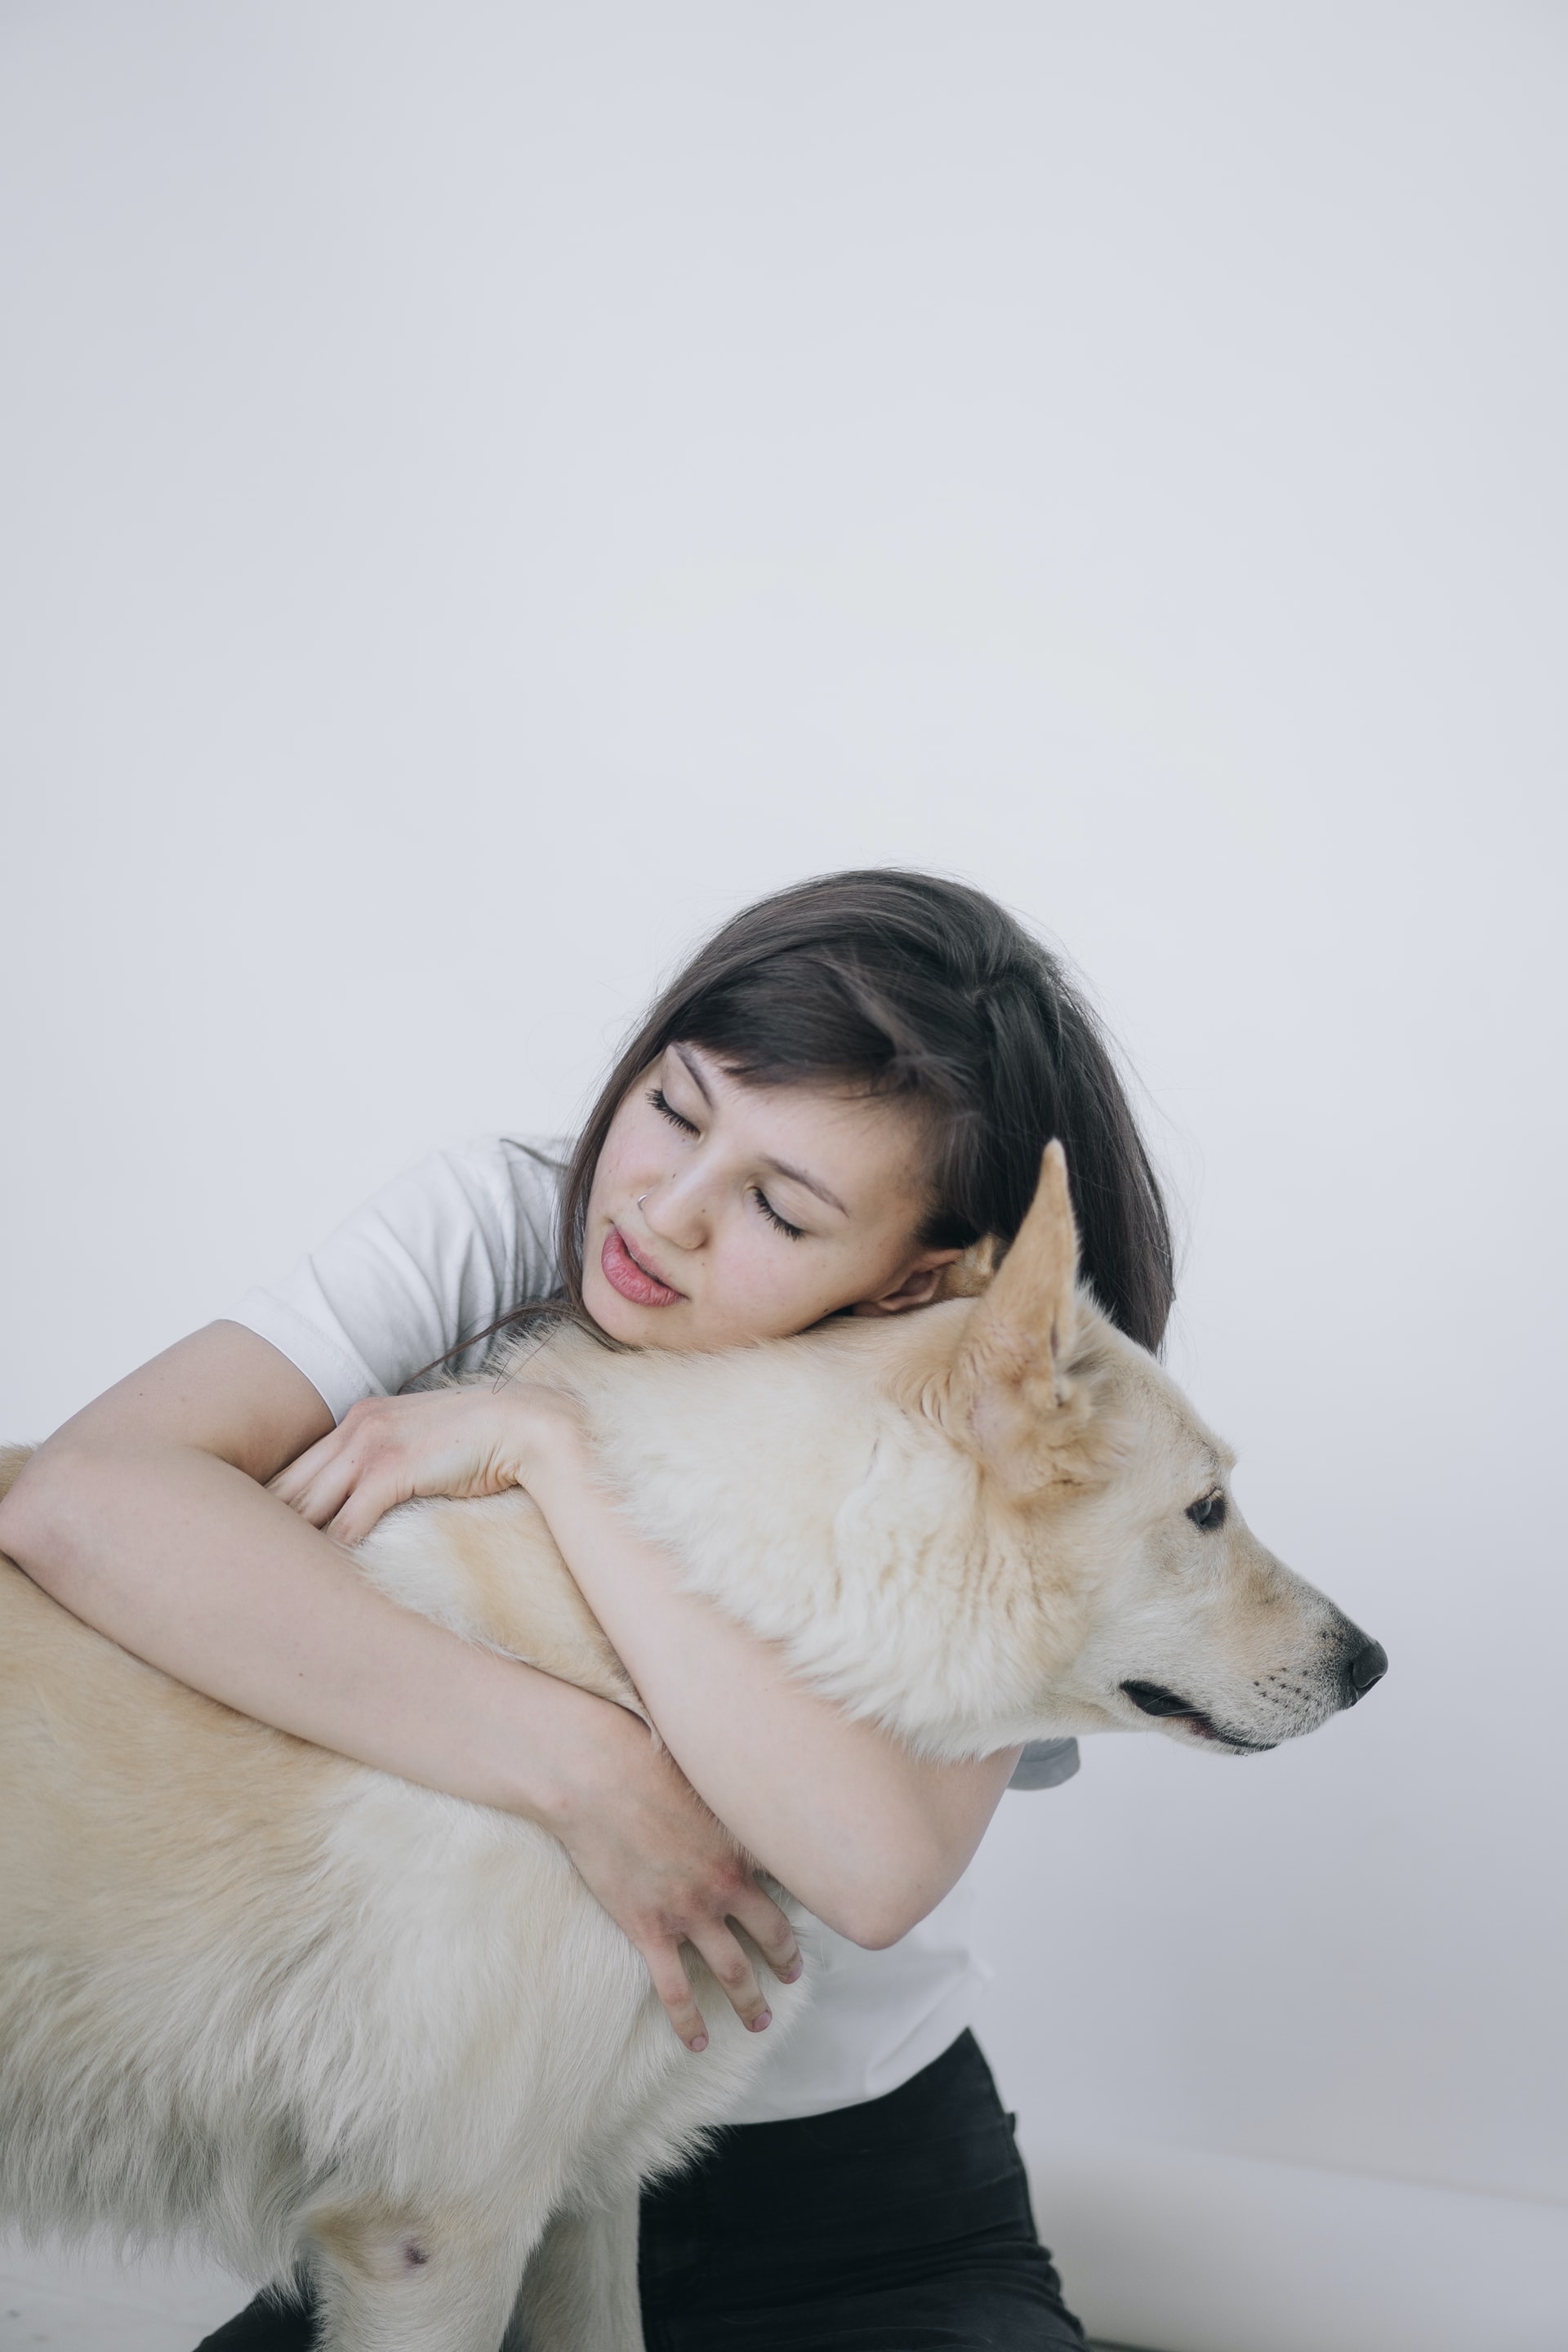 A girl hugging a dog